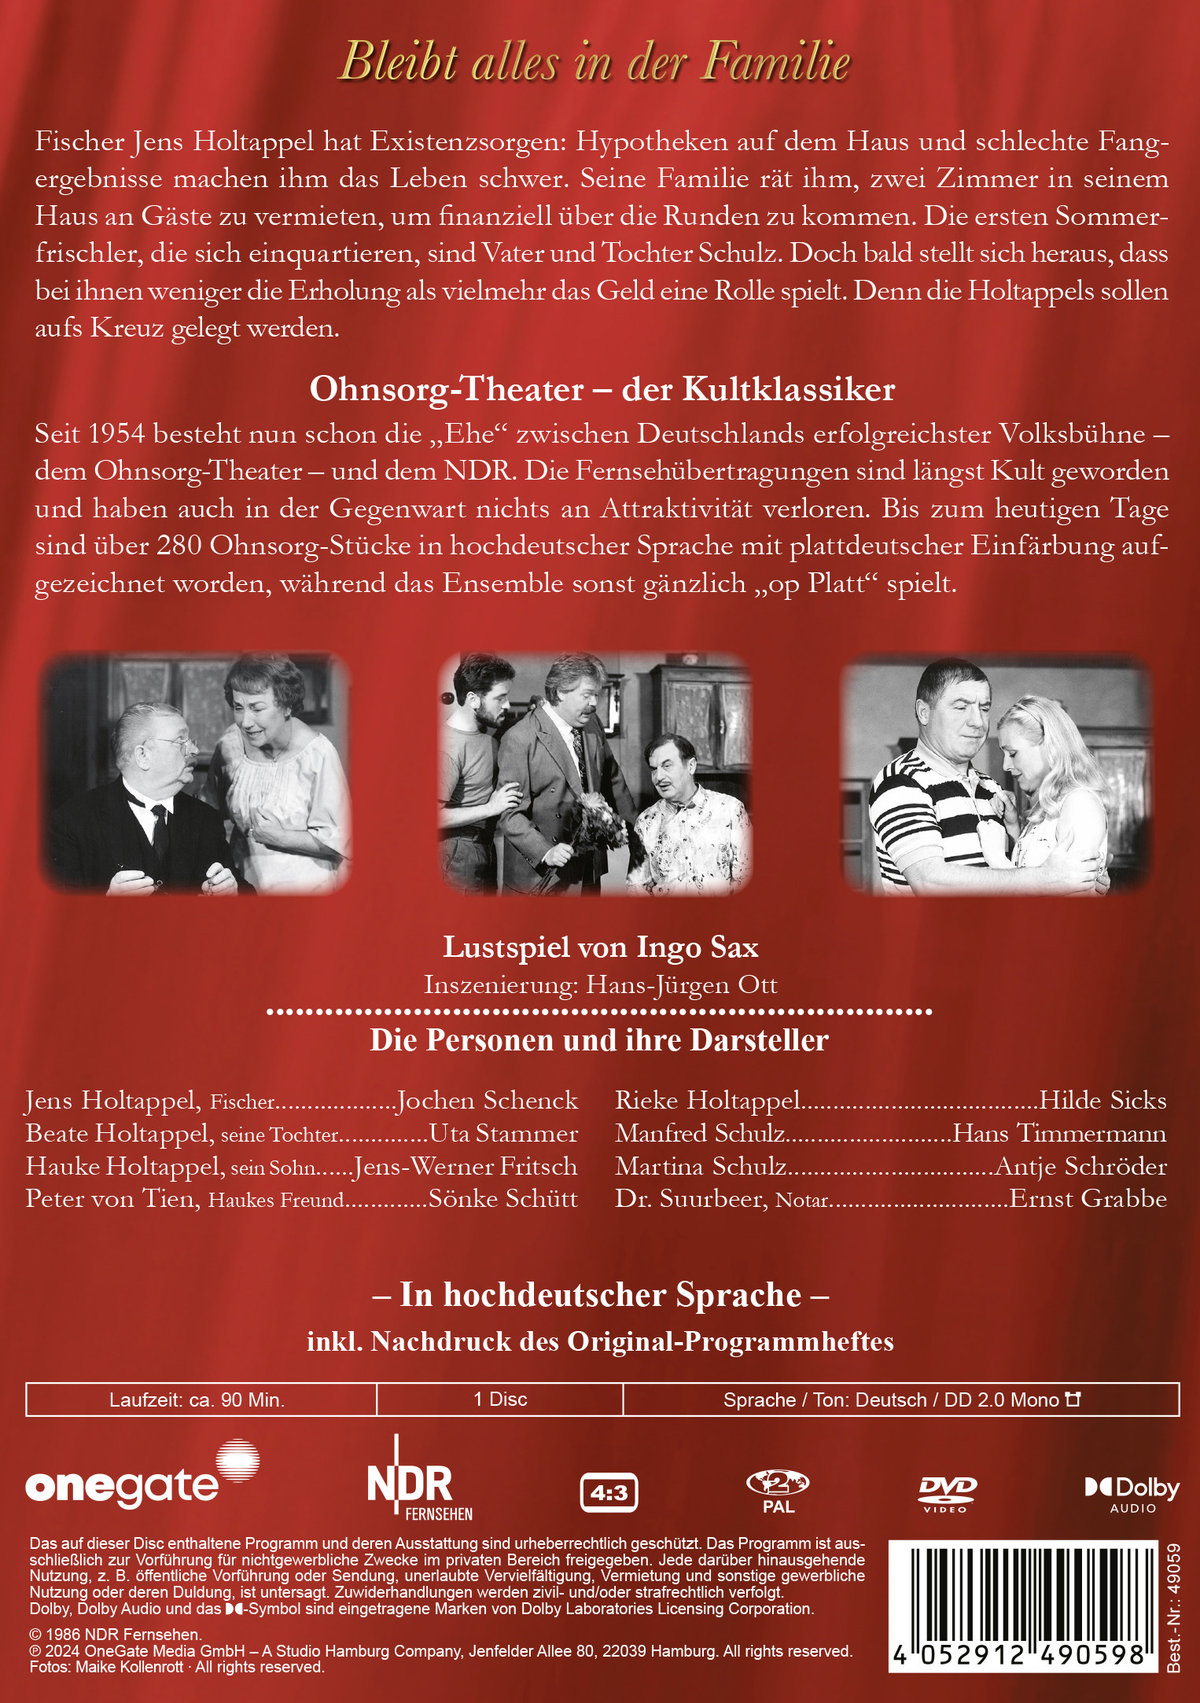 Ohnsorg-Theater Klassiker: Bleibt alles in der Familie  (DVD)